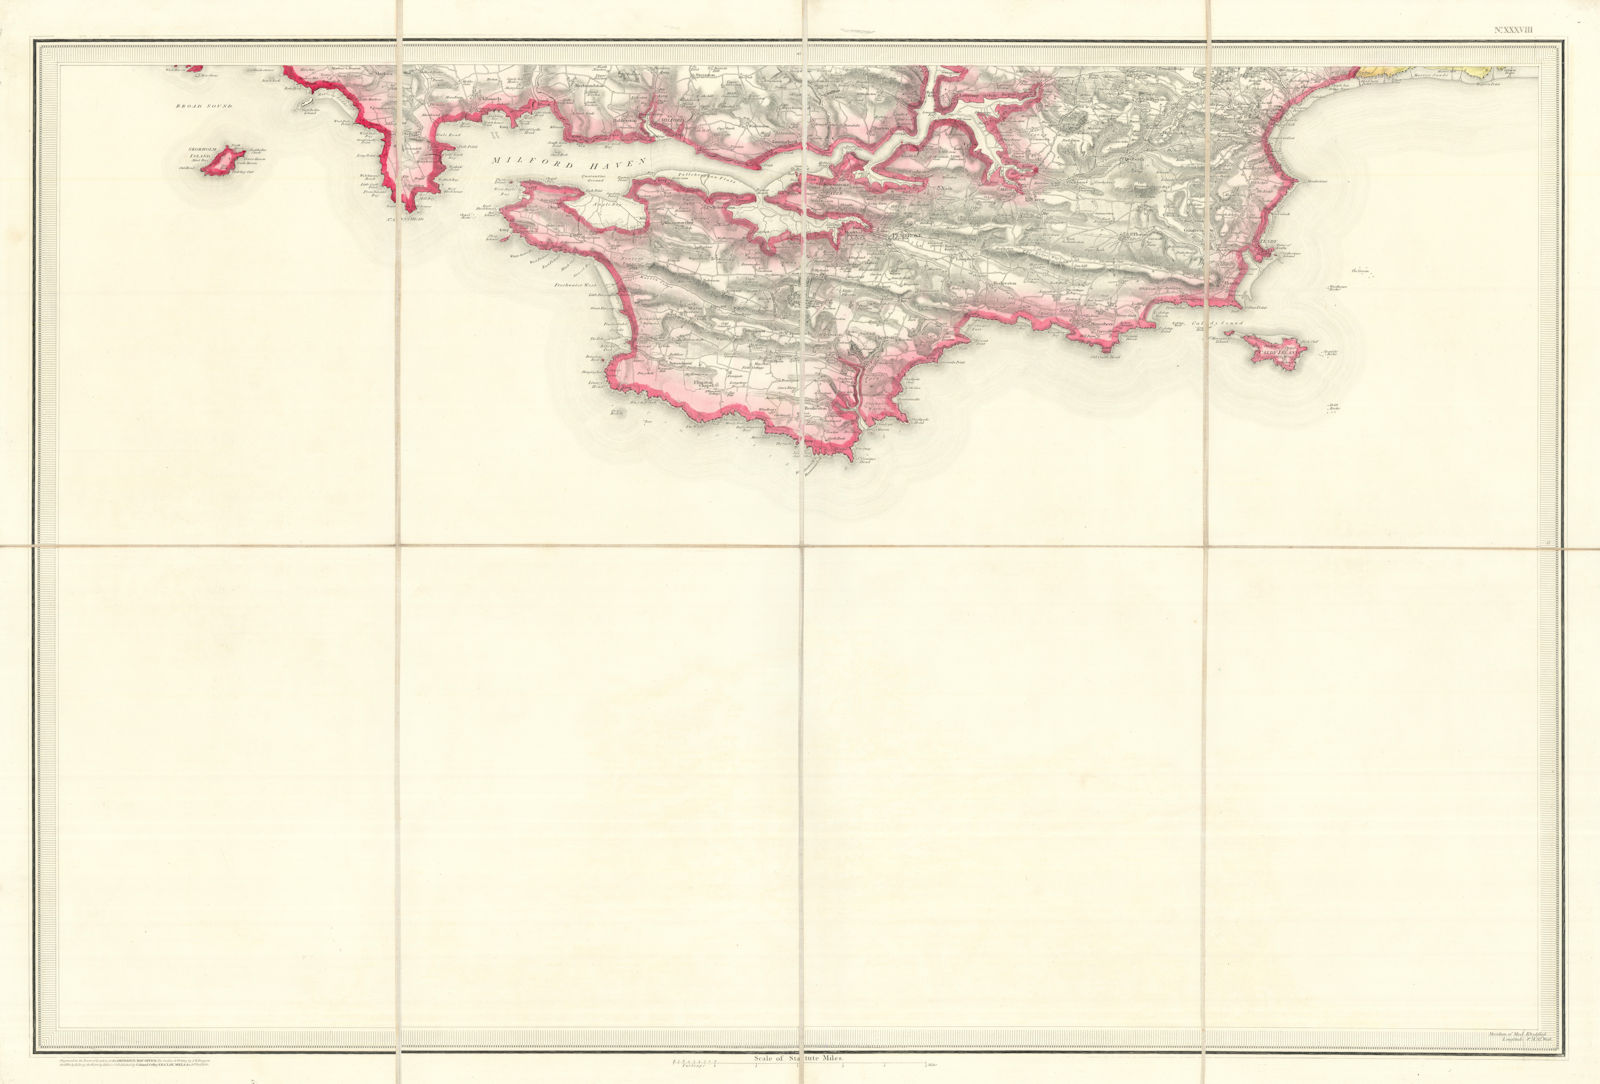 OS #38 Milford Haven & South Pembrokeshire Coast. Pembroke Dock Tenby 1839 map